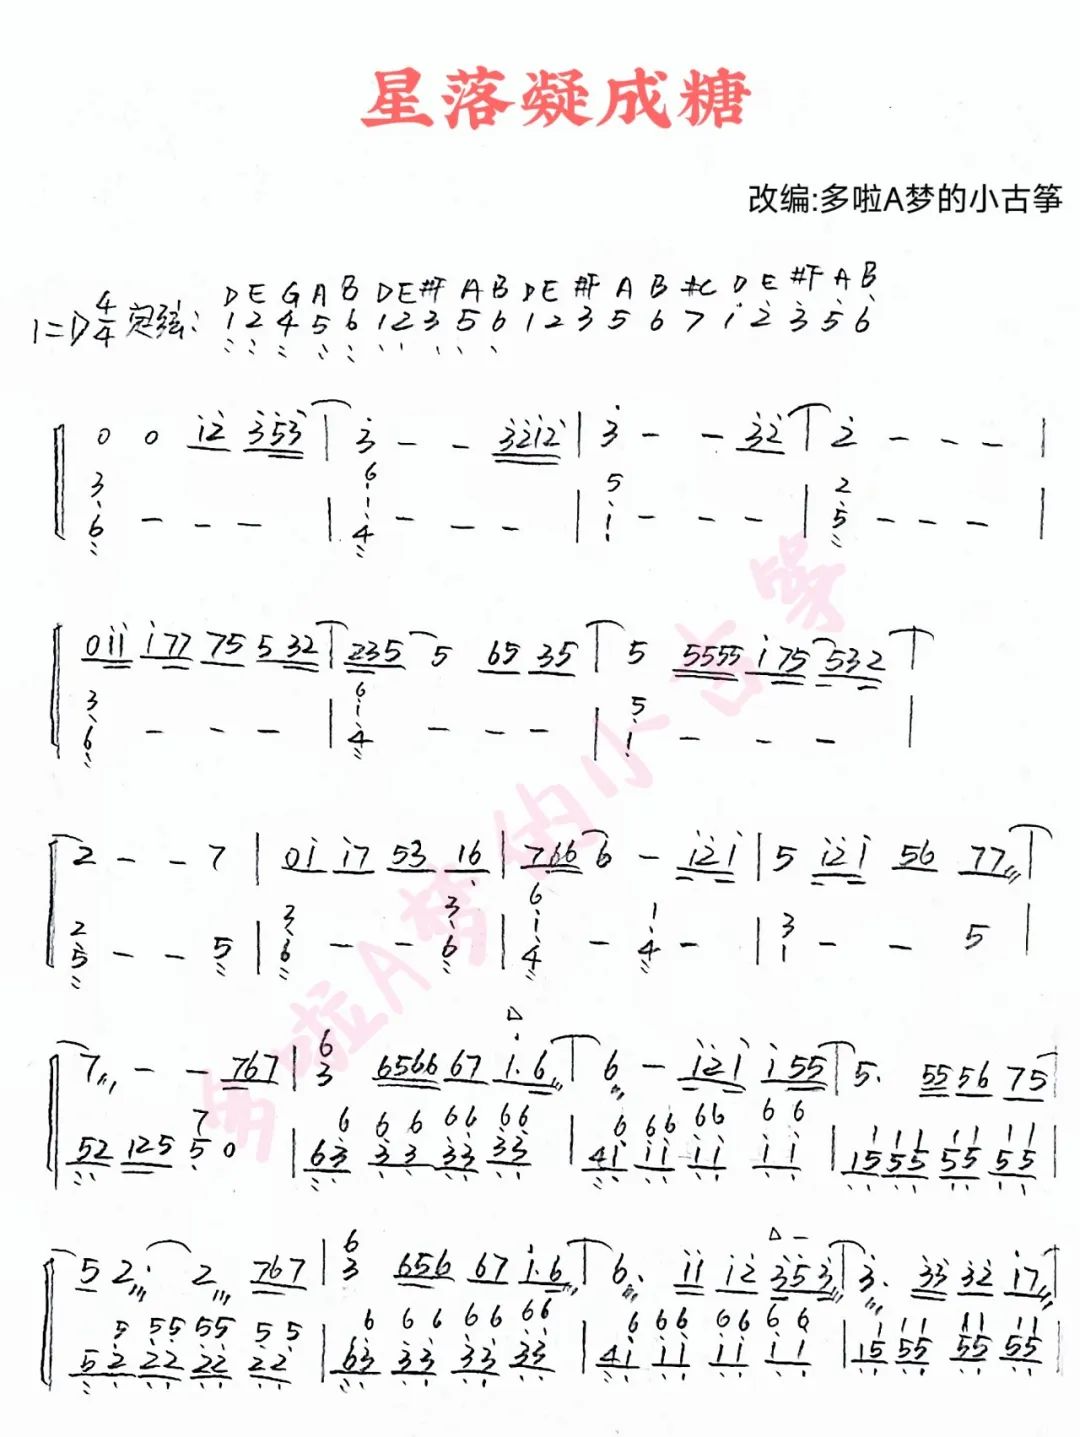 Starfall condensed into sugar（guzheng sheet music）